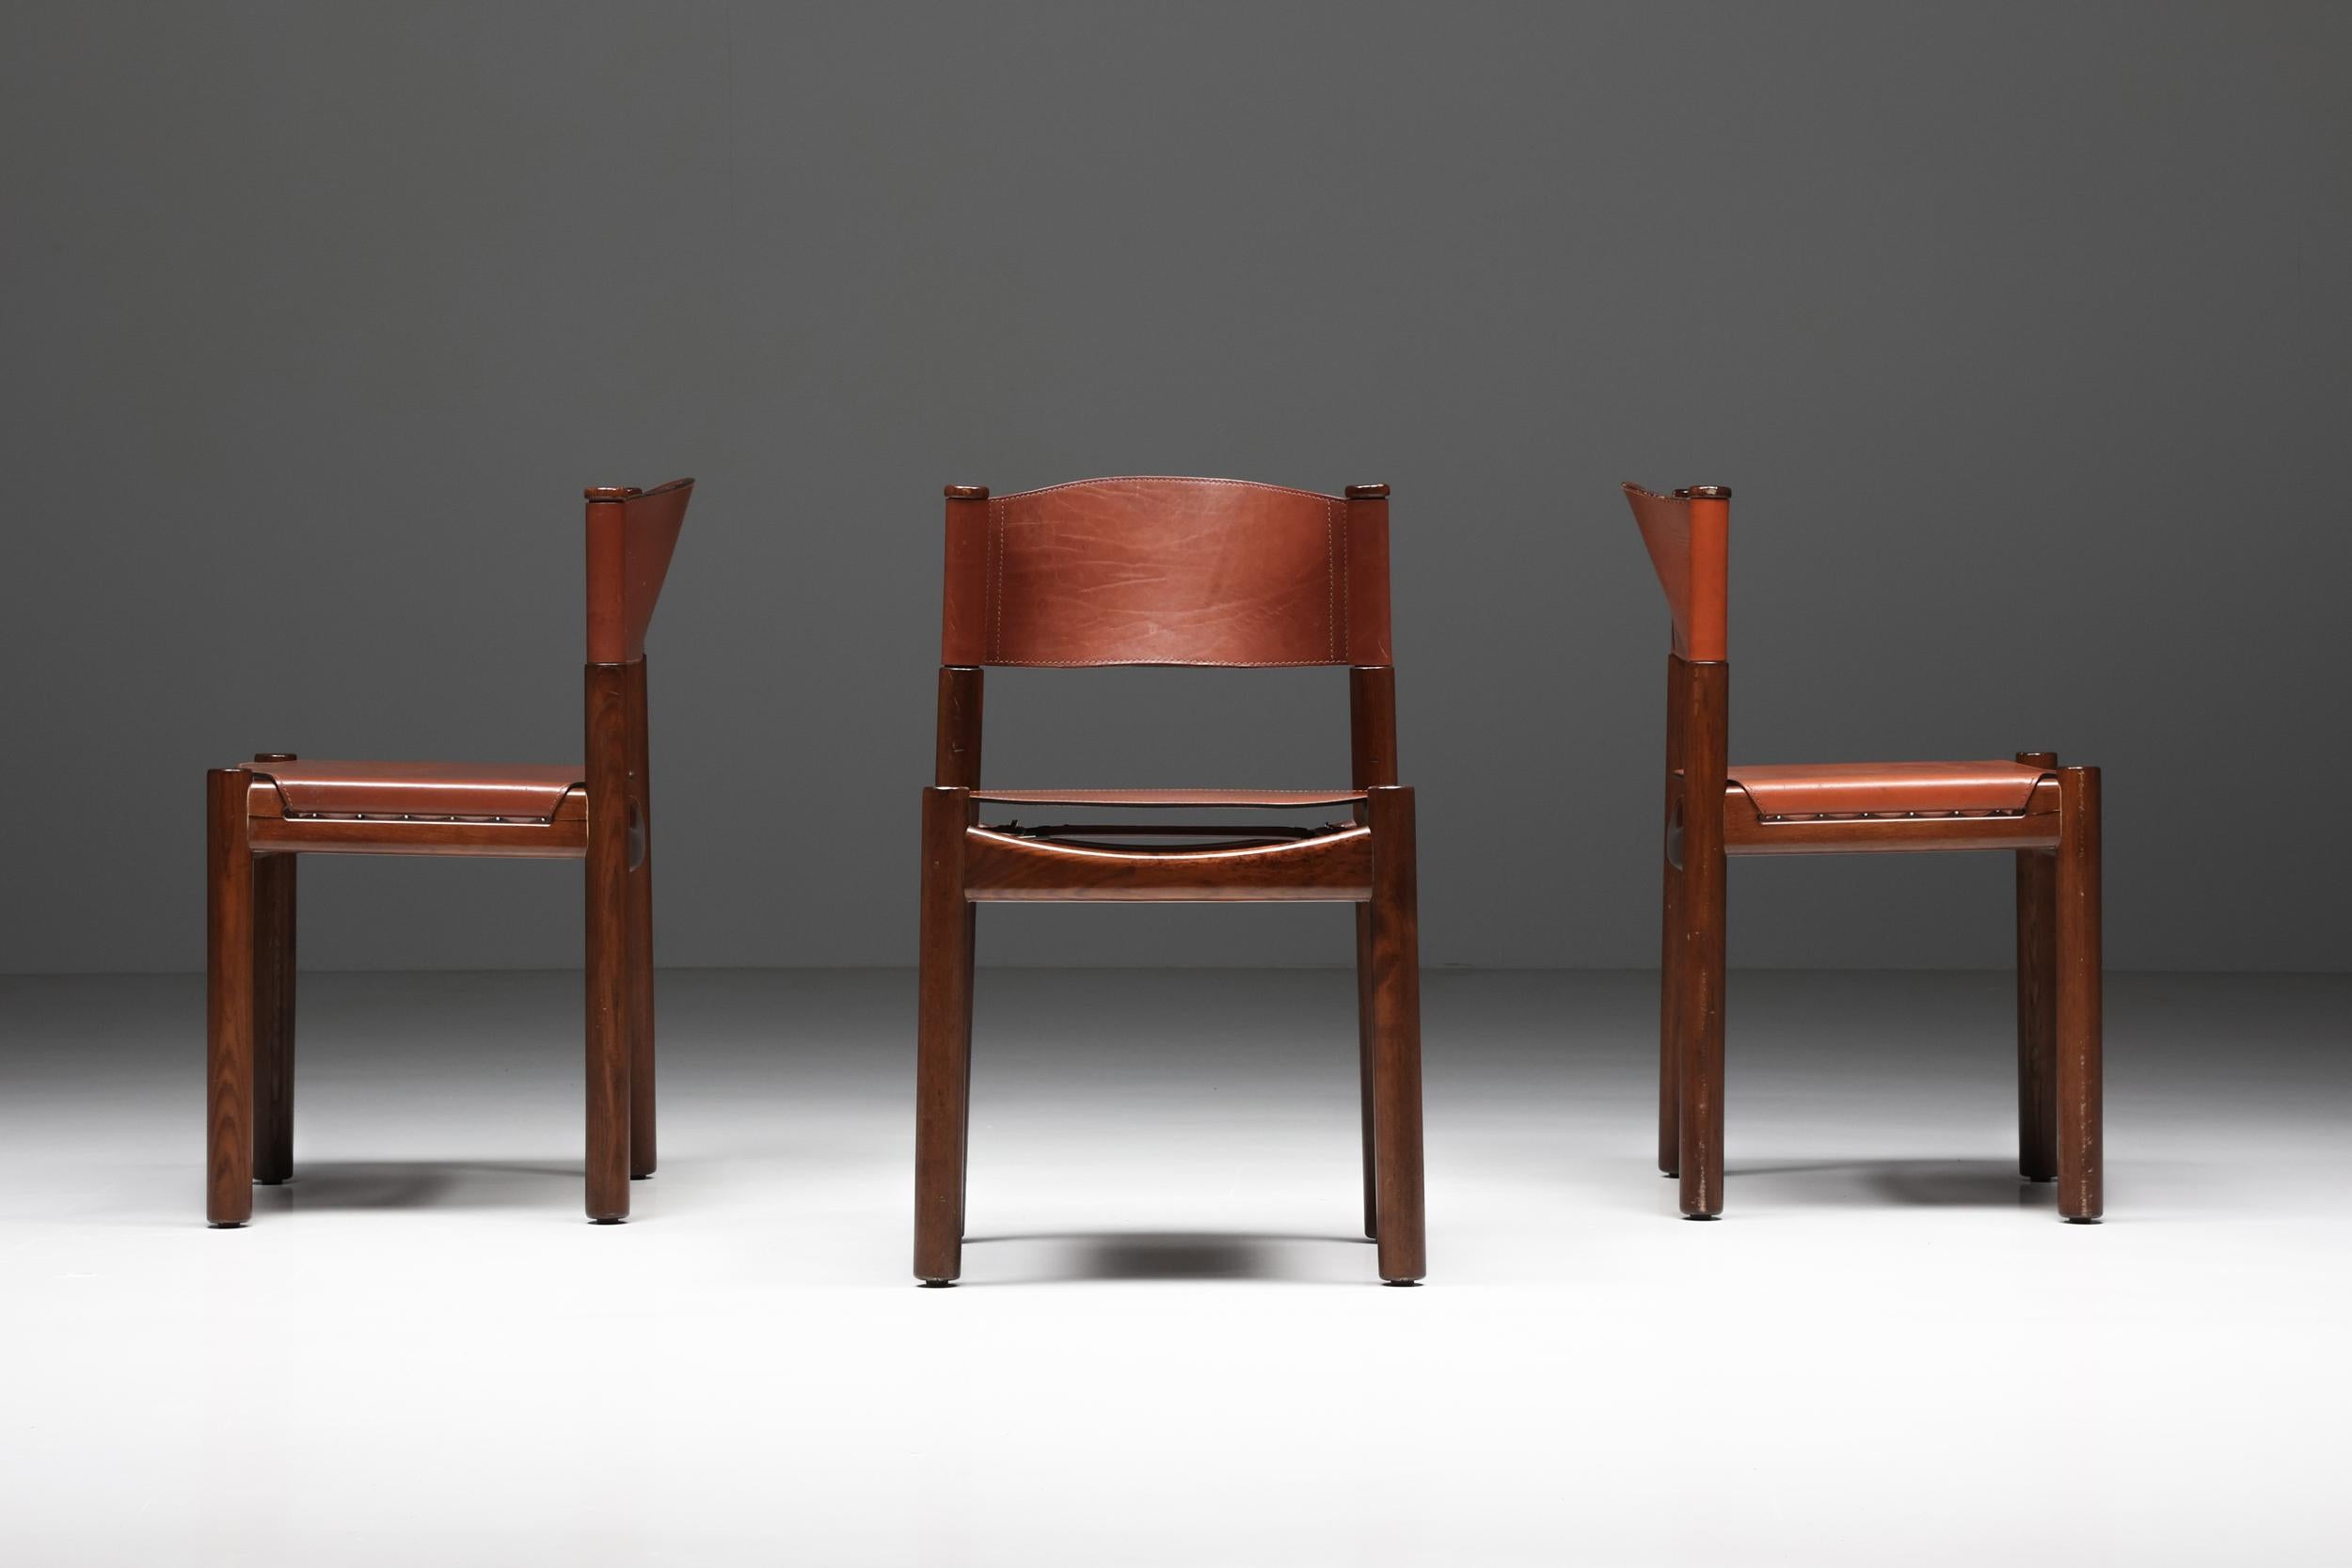 Italian Scarpa Inspired Walnut & Leather Dining Chairs, Mid-Century Modern, Rustic 1950'